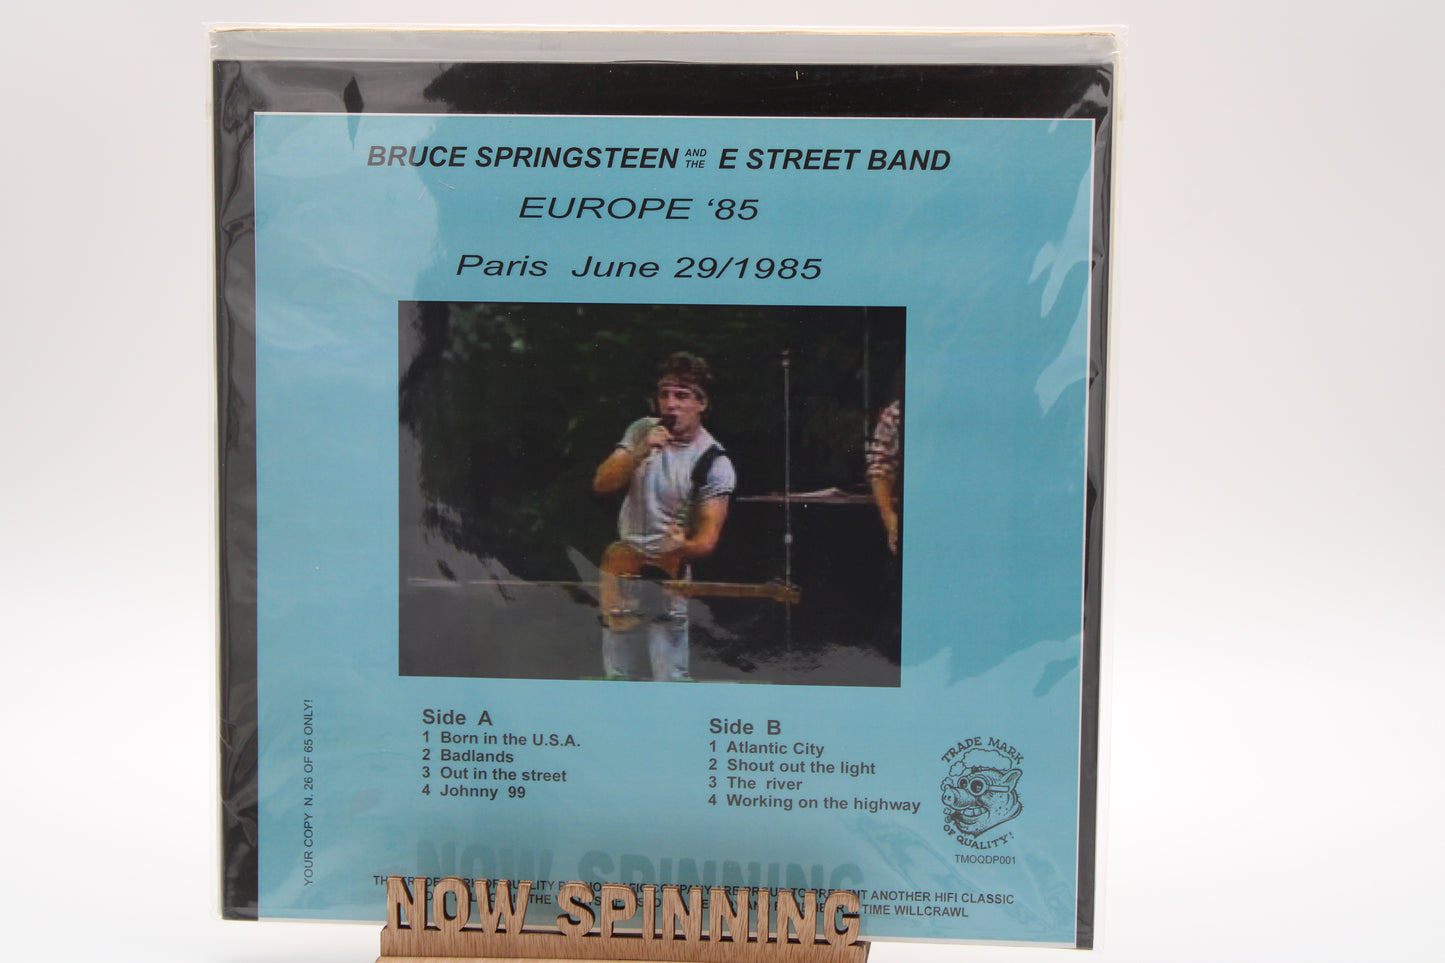 Bruce Springsteen & E St Band  Unofficial Vinyl LP - Europe ‘85 Paris June 29, 1985